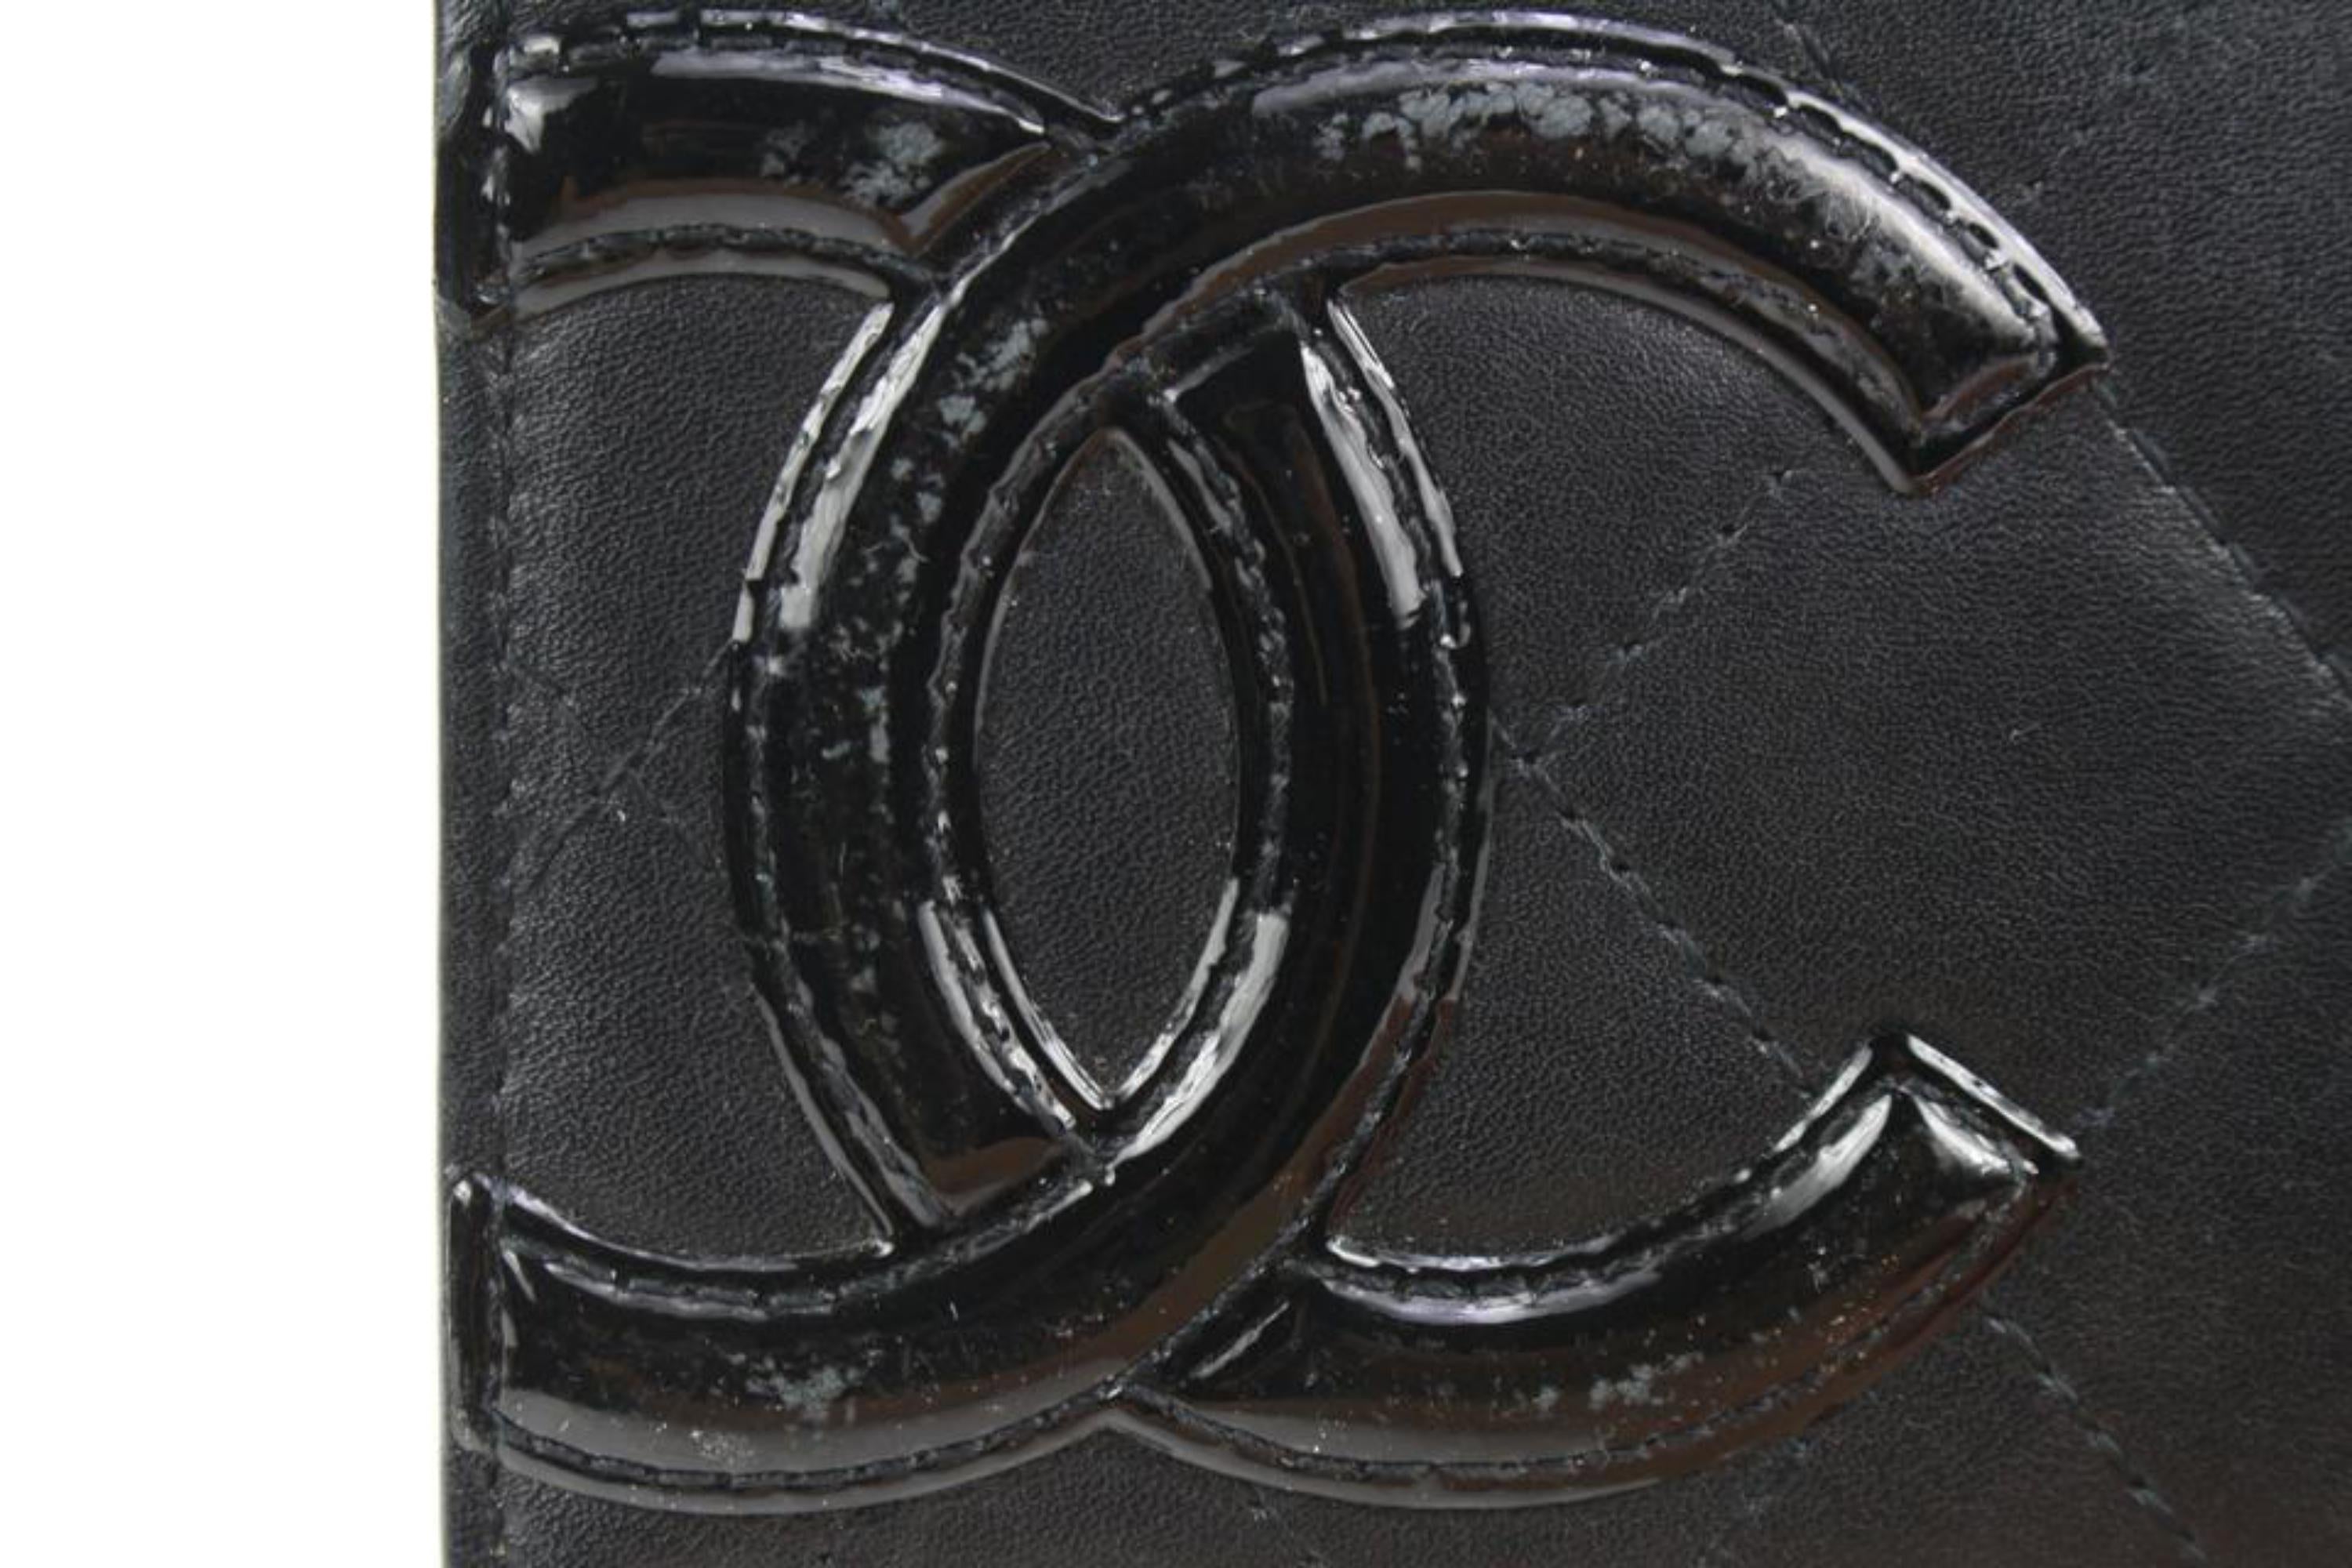 Chanel Cambon Wallet